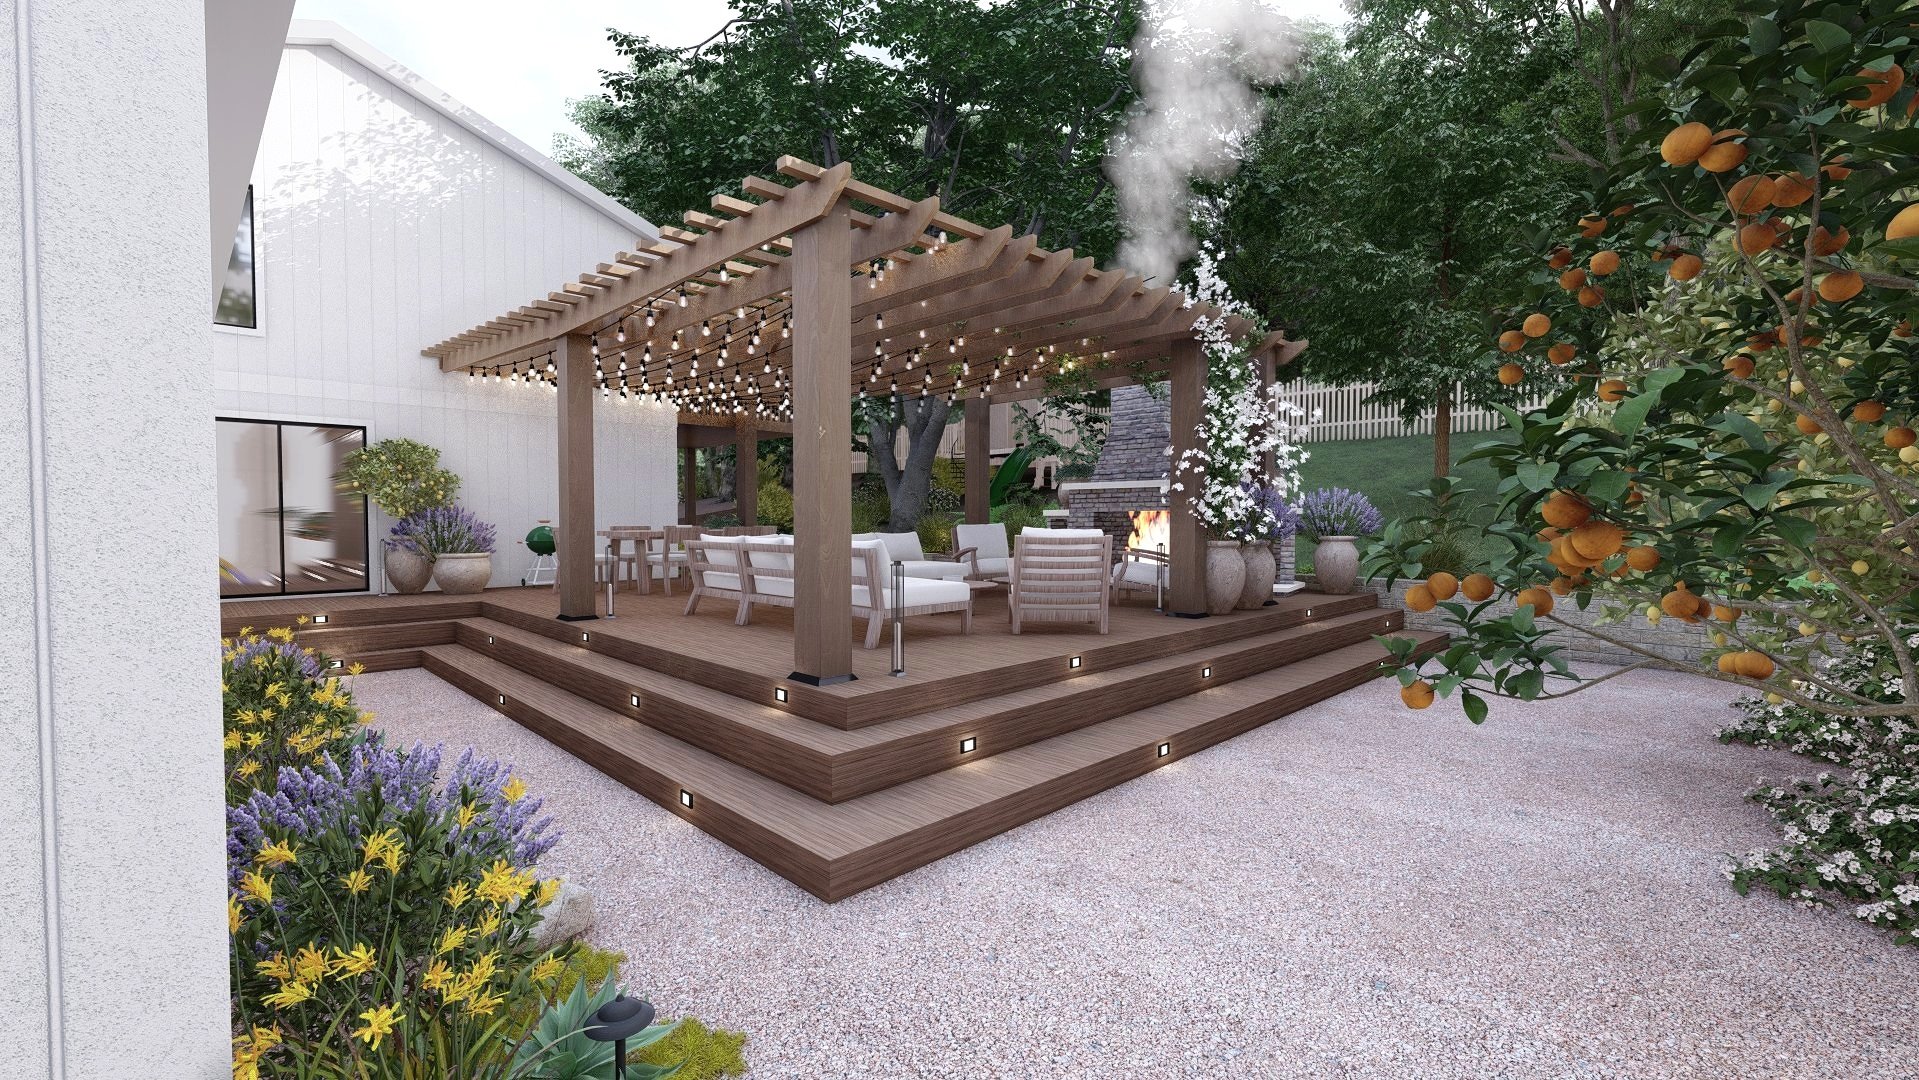 Graveled backyard, deck social area, pergola with whimsical lights, fireplace, fruit plants, flowers